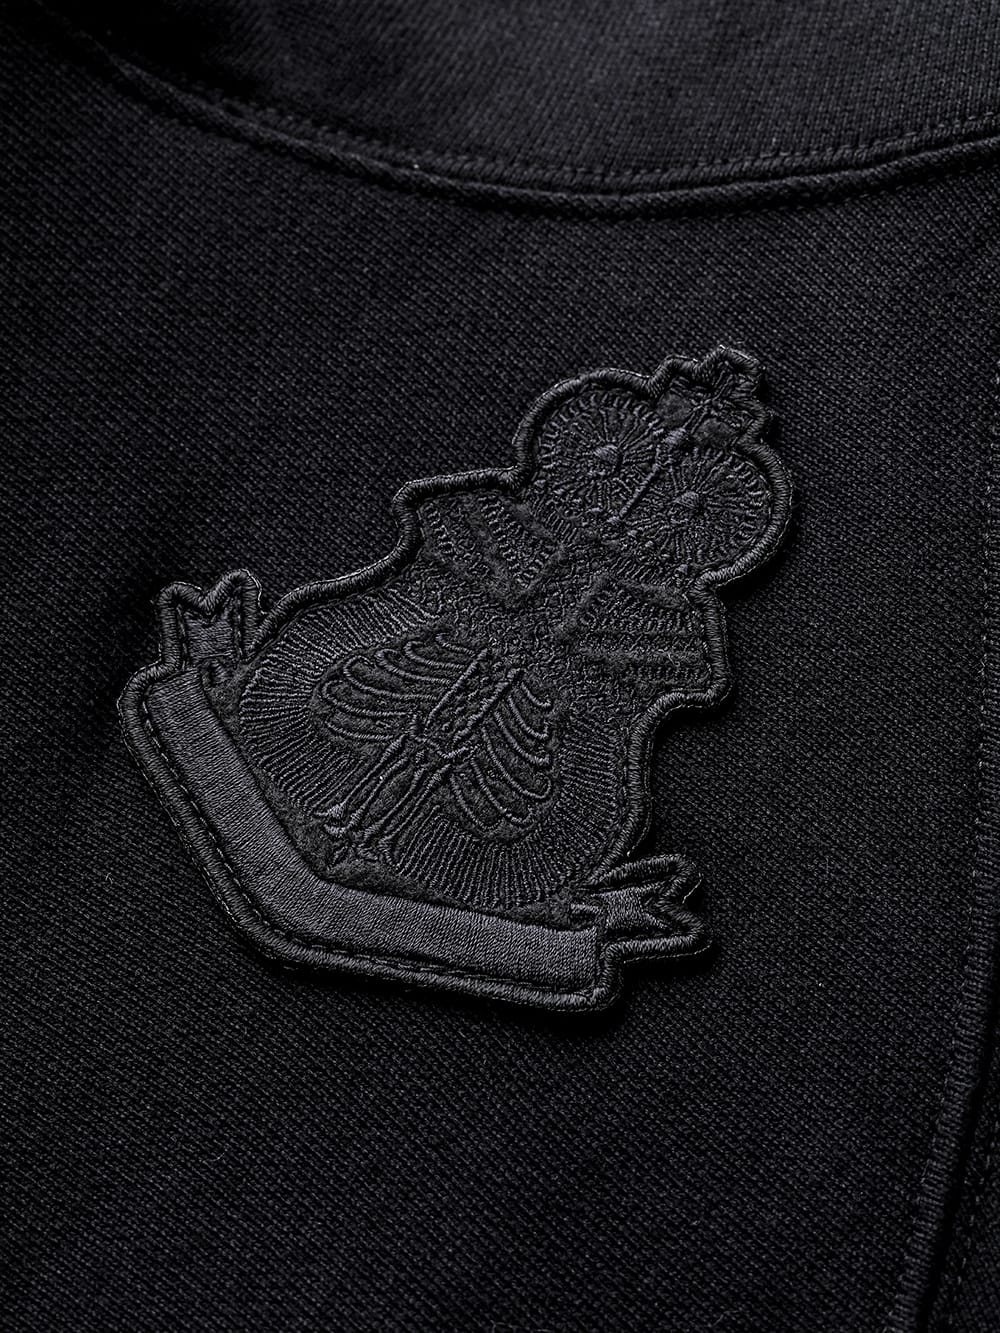 S logo and bone emblem. (hoodie)